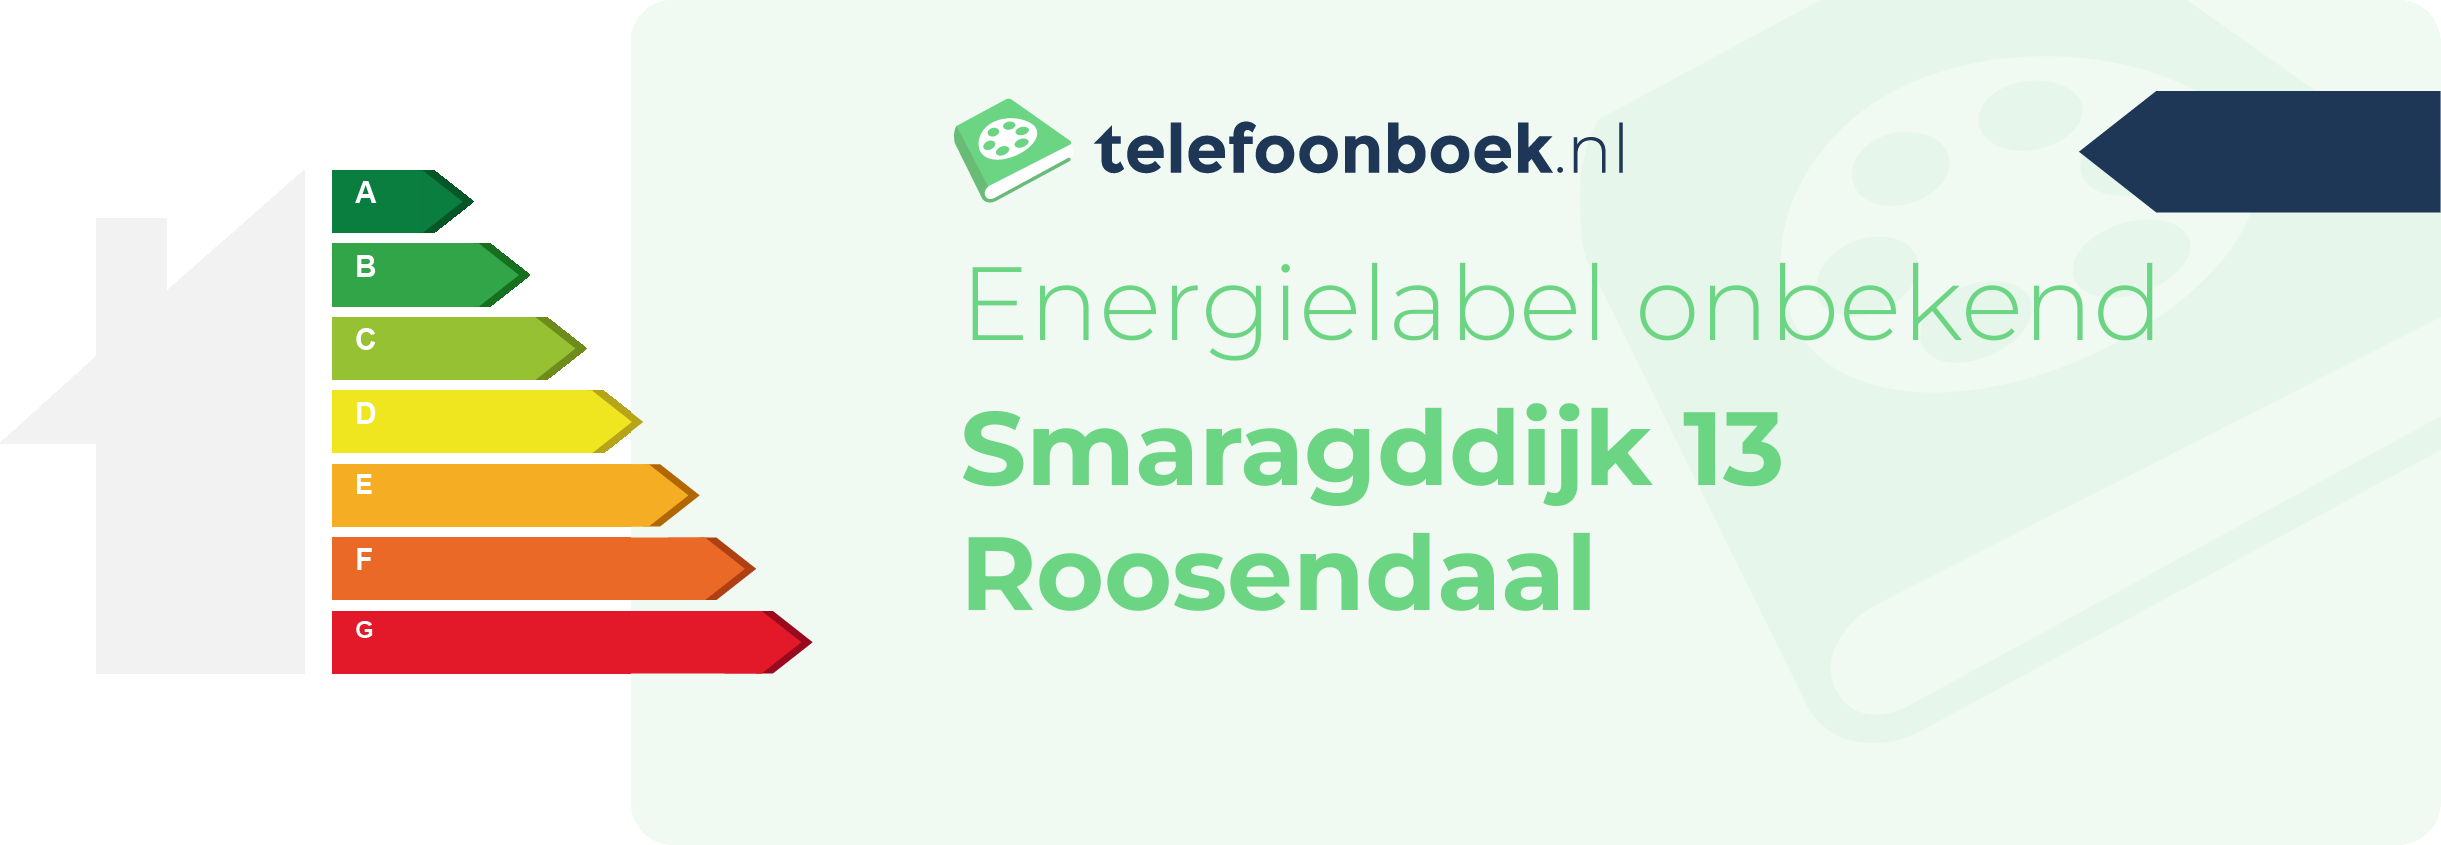 Energielabel Smaragddijk 13 Roosendaal